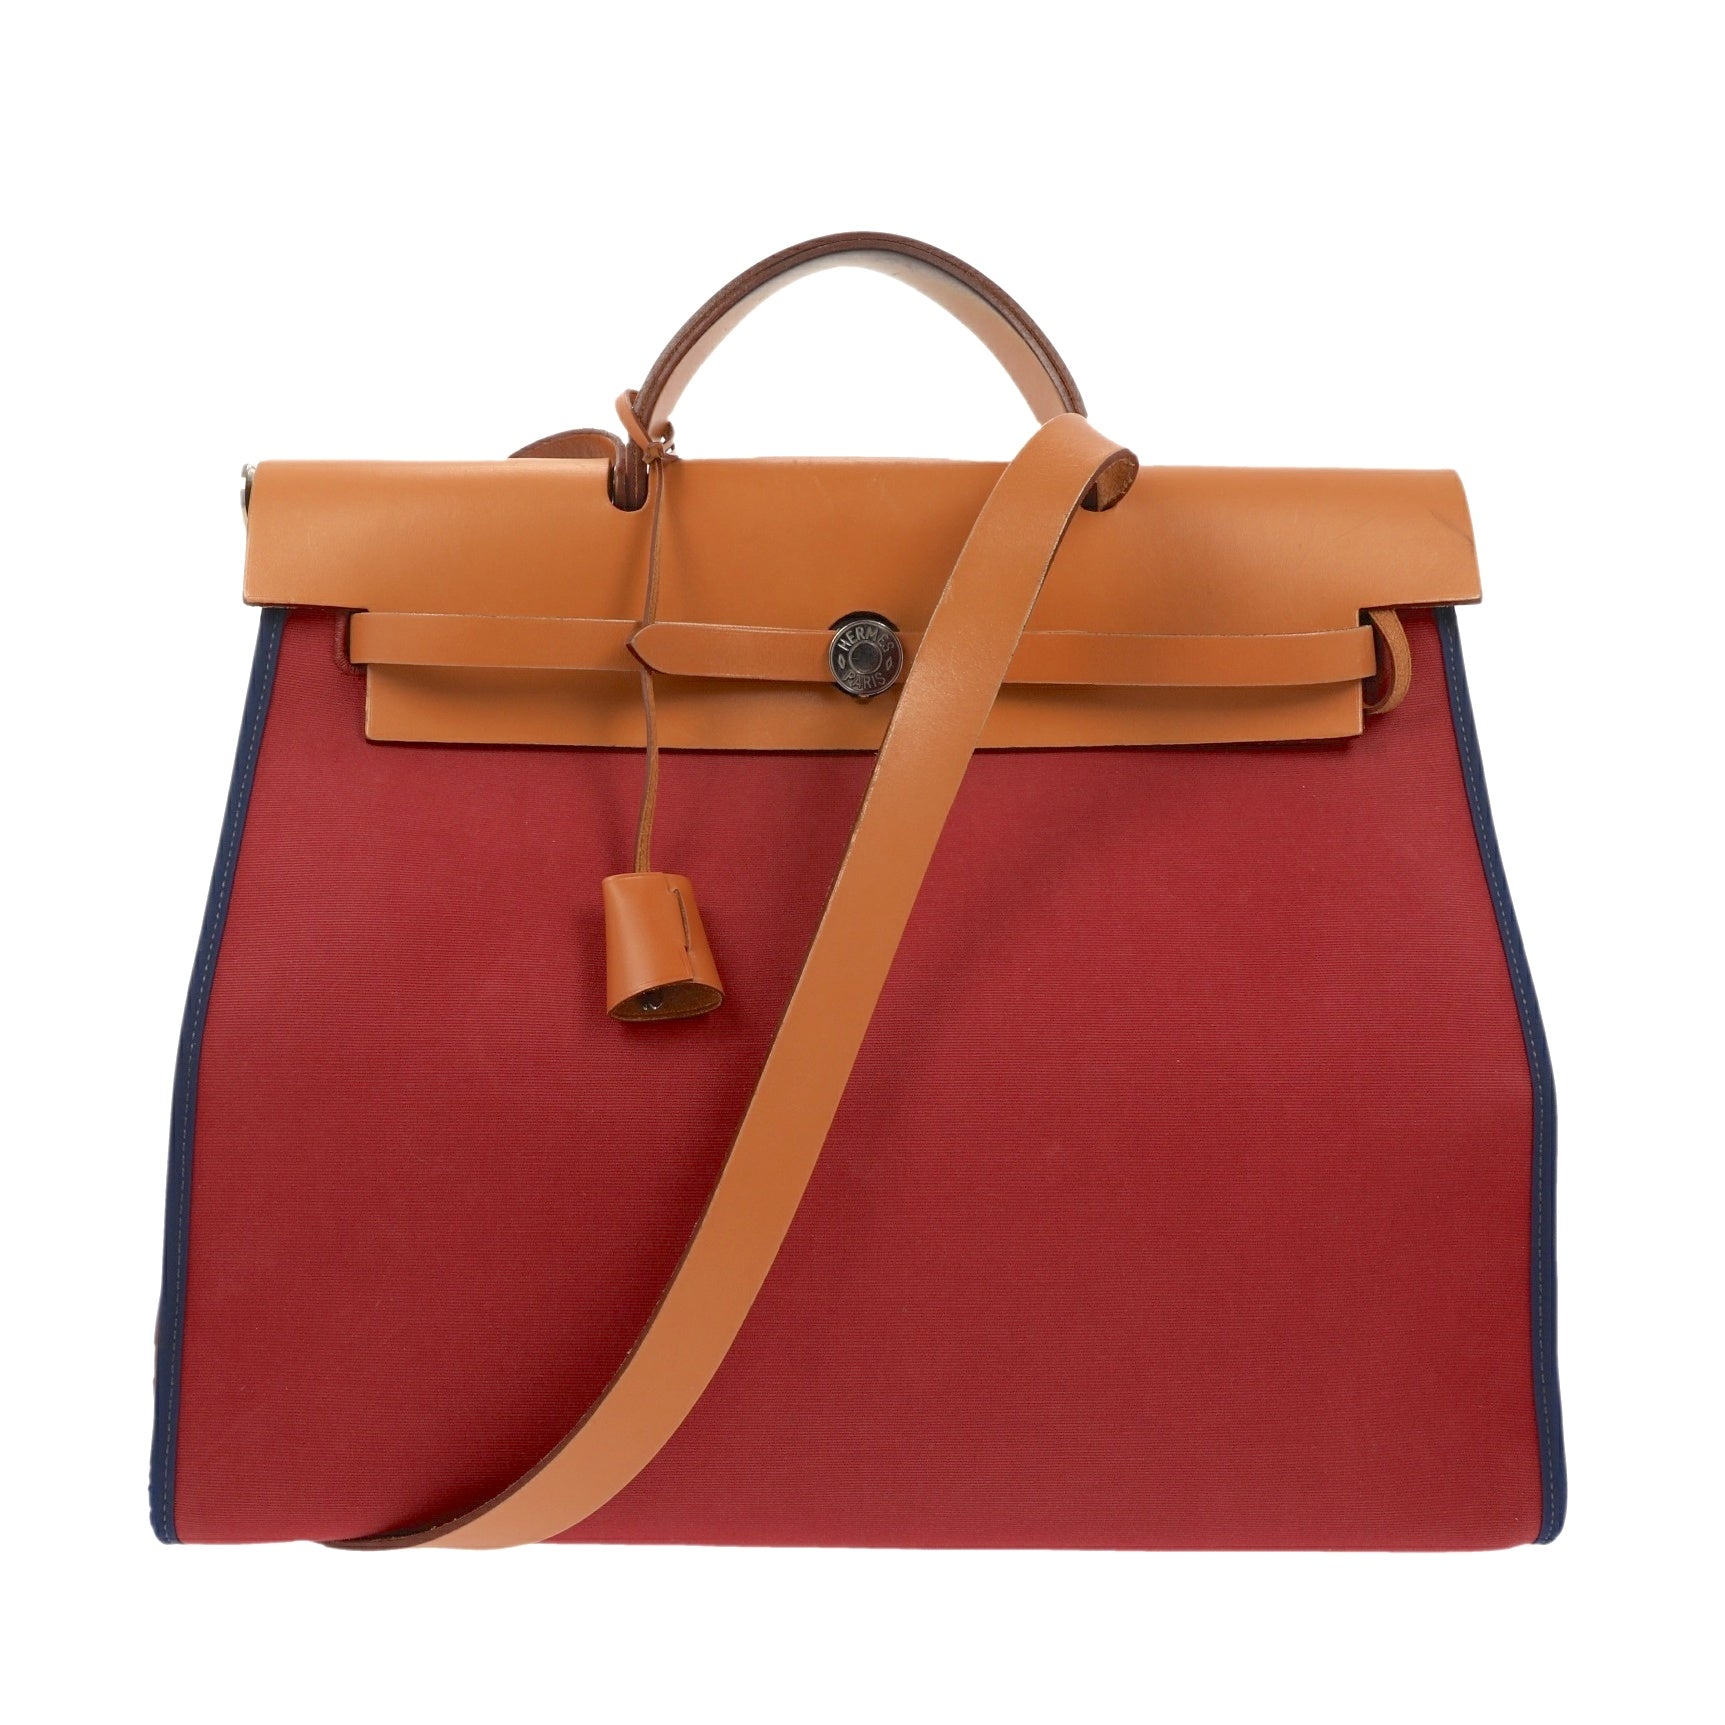 Herbag leather handbag